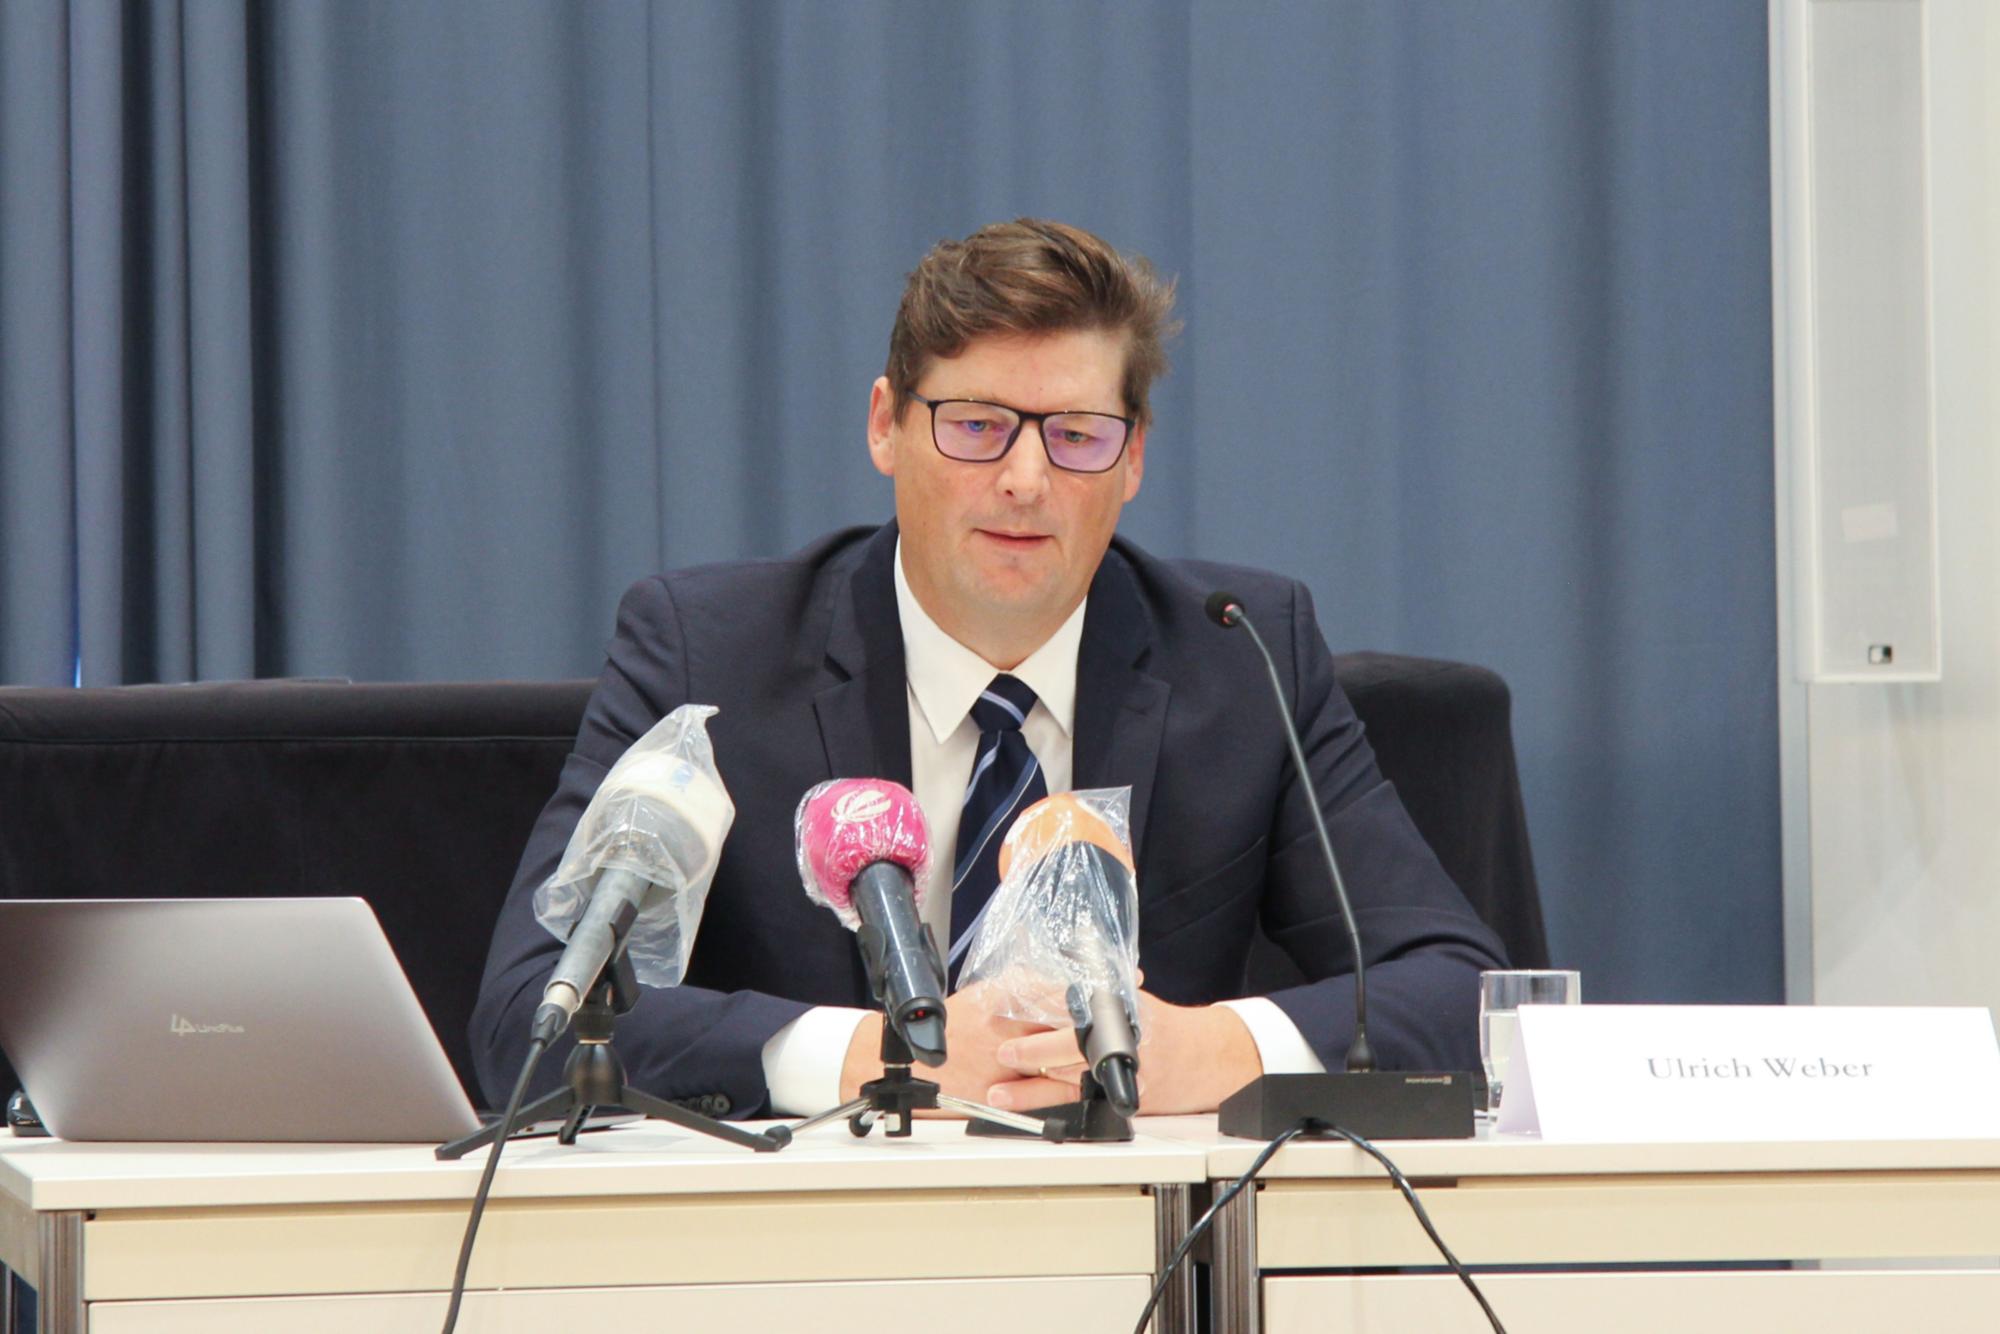 Rechtsanwalt Weber bei der Pressekonferenz am 7 Oktober 2020 in Mainz (c) Bistum Mainz